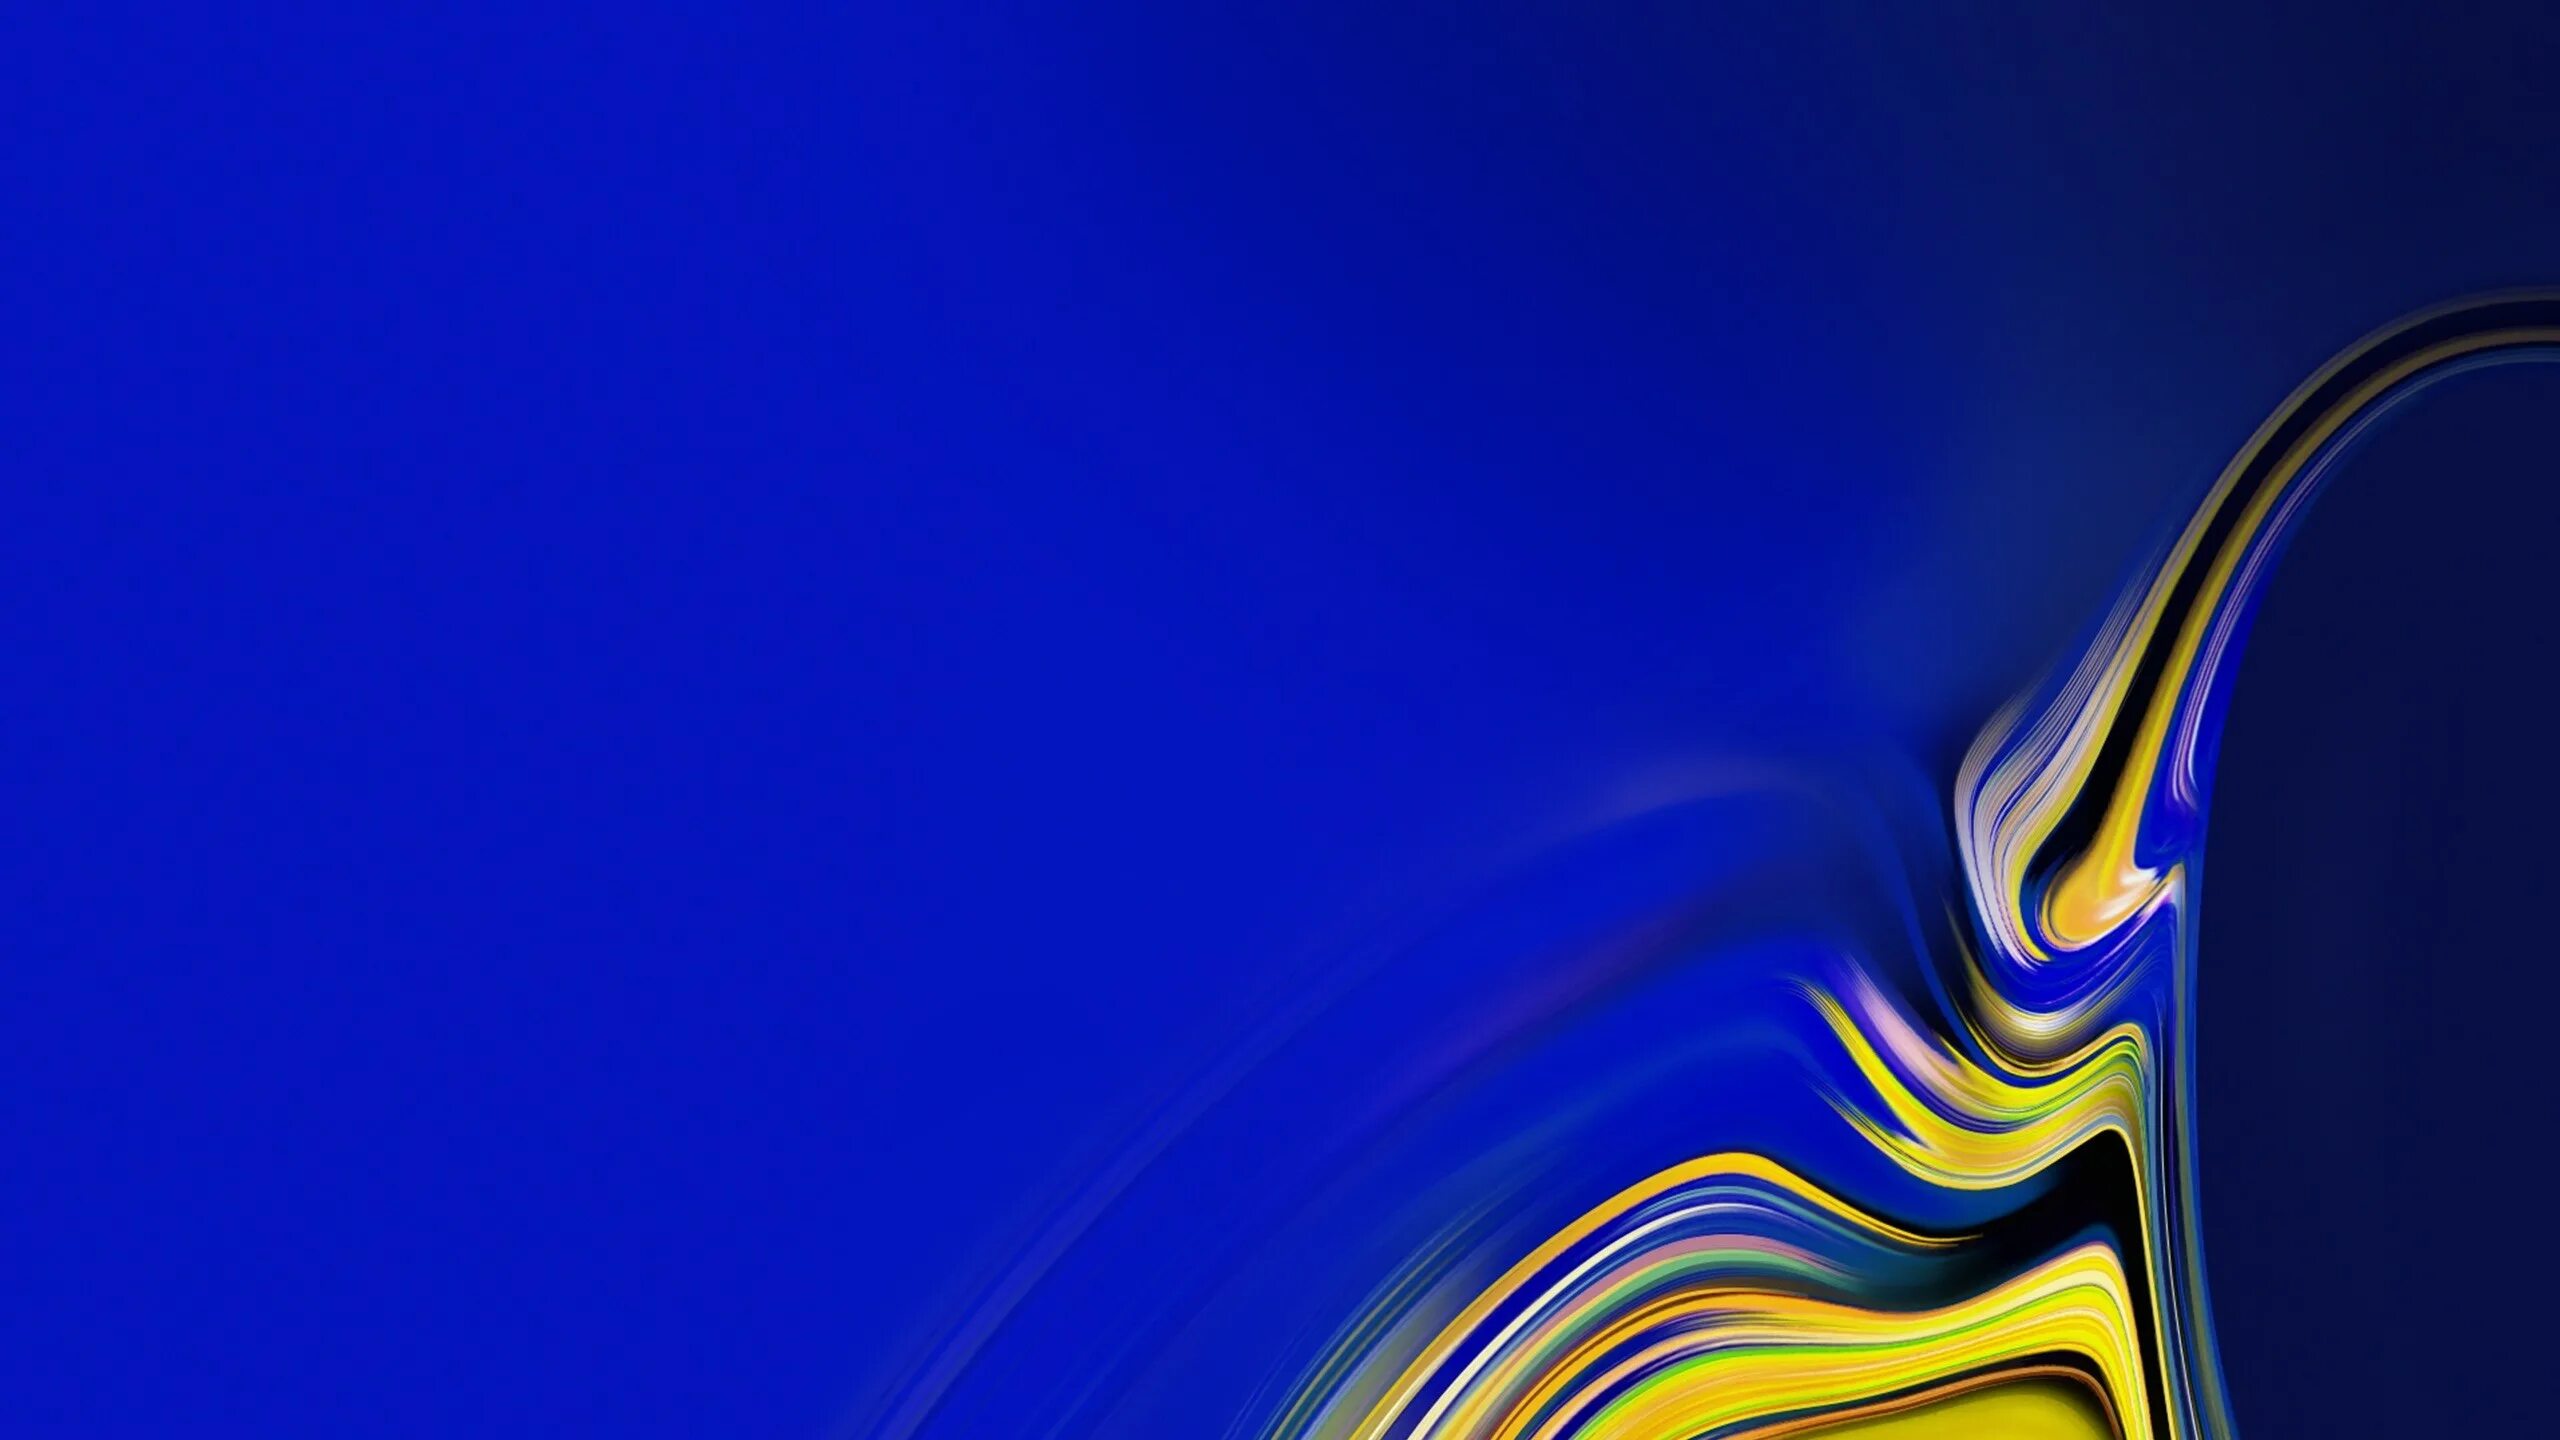 Обои самсунг галакси s20 Ultra. Samsung Galaxy Note 9 Wallpapers. Желто голубая абстракция. Желто синий фон. Обои ноте 9